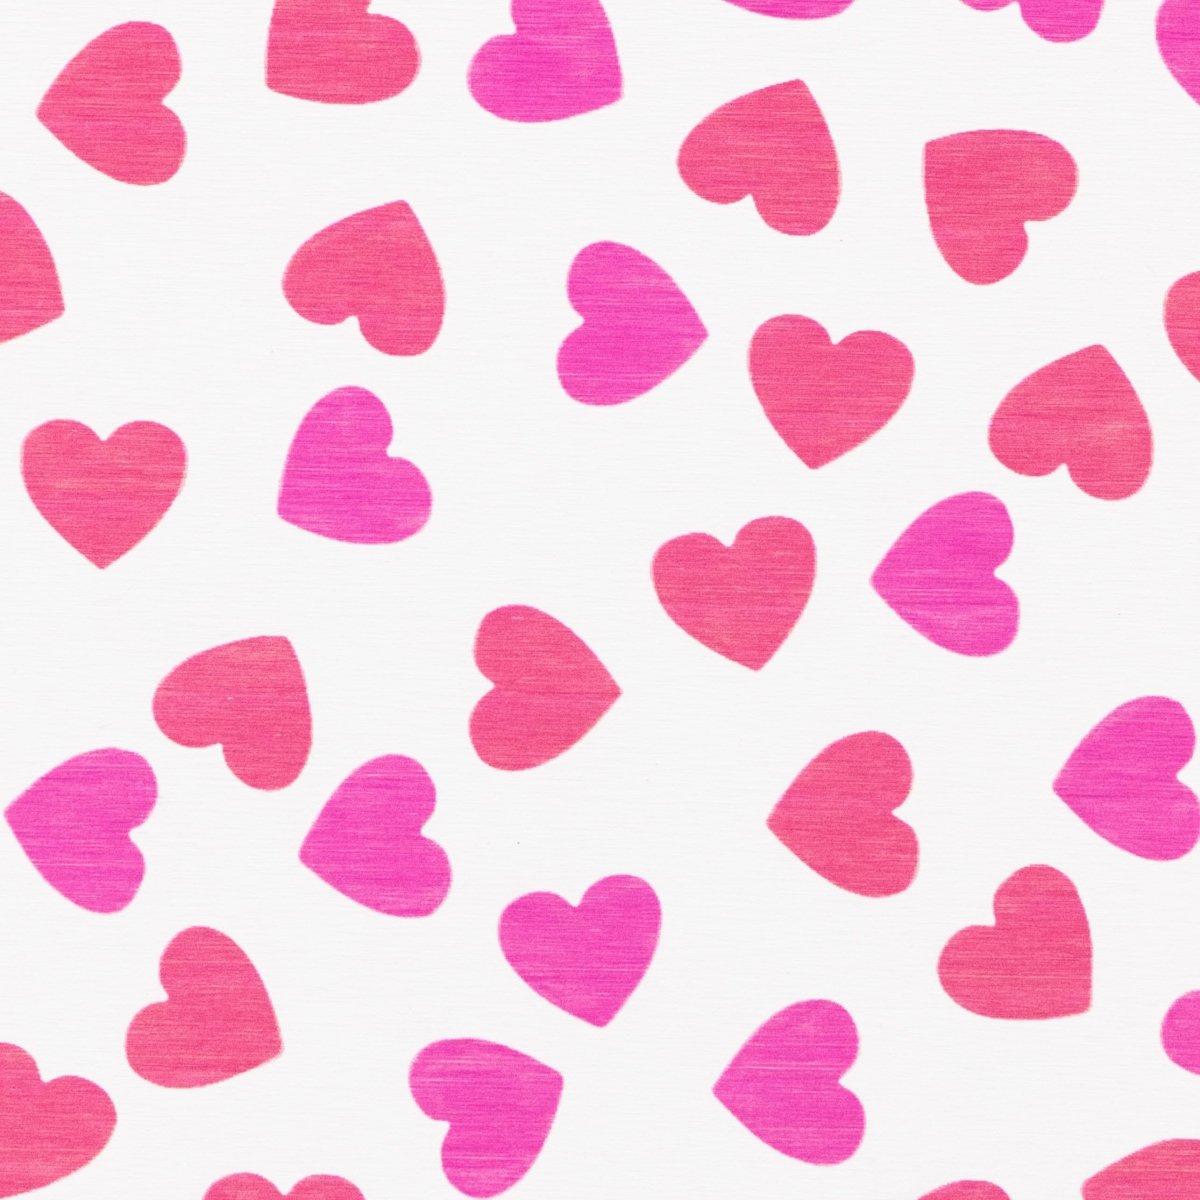 Pink Hearts Bathmat - Minimalist Valentine Bathmat - Abstract Hearts Bathroom Mat - Classical Bathmat - White Stone Nonslip Bath Mat - Slips Away - 1344546461 -